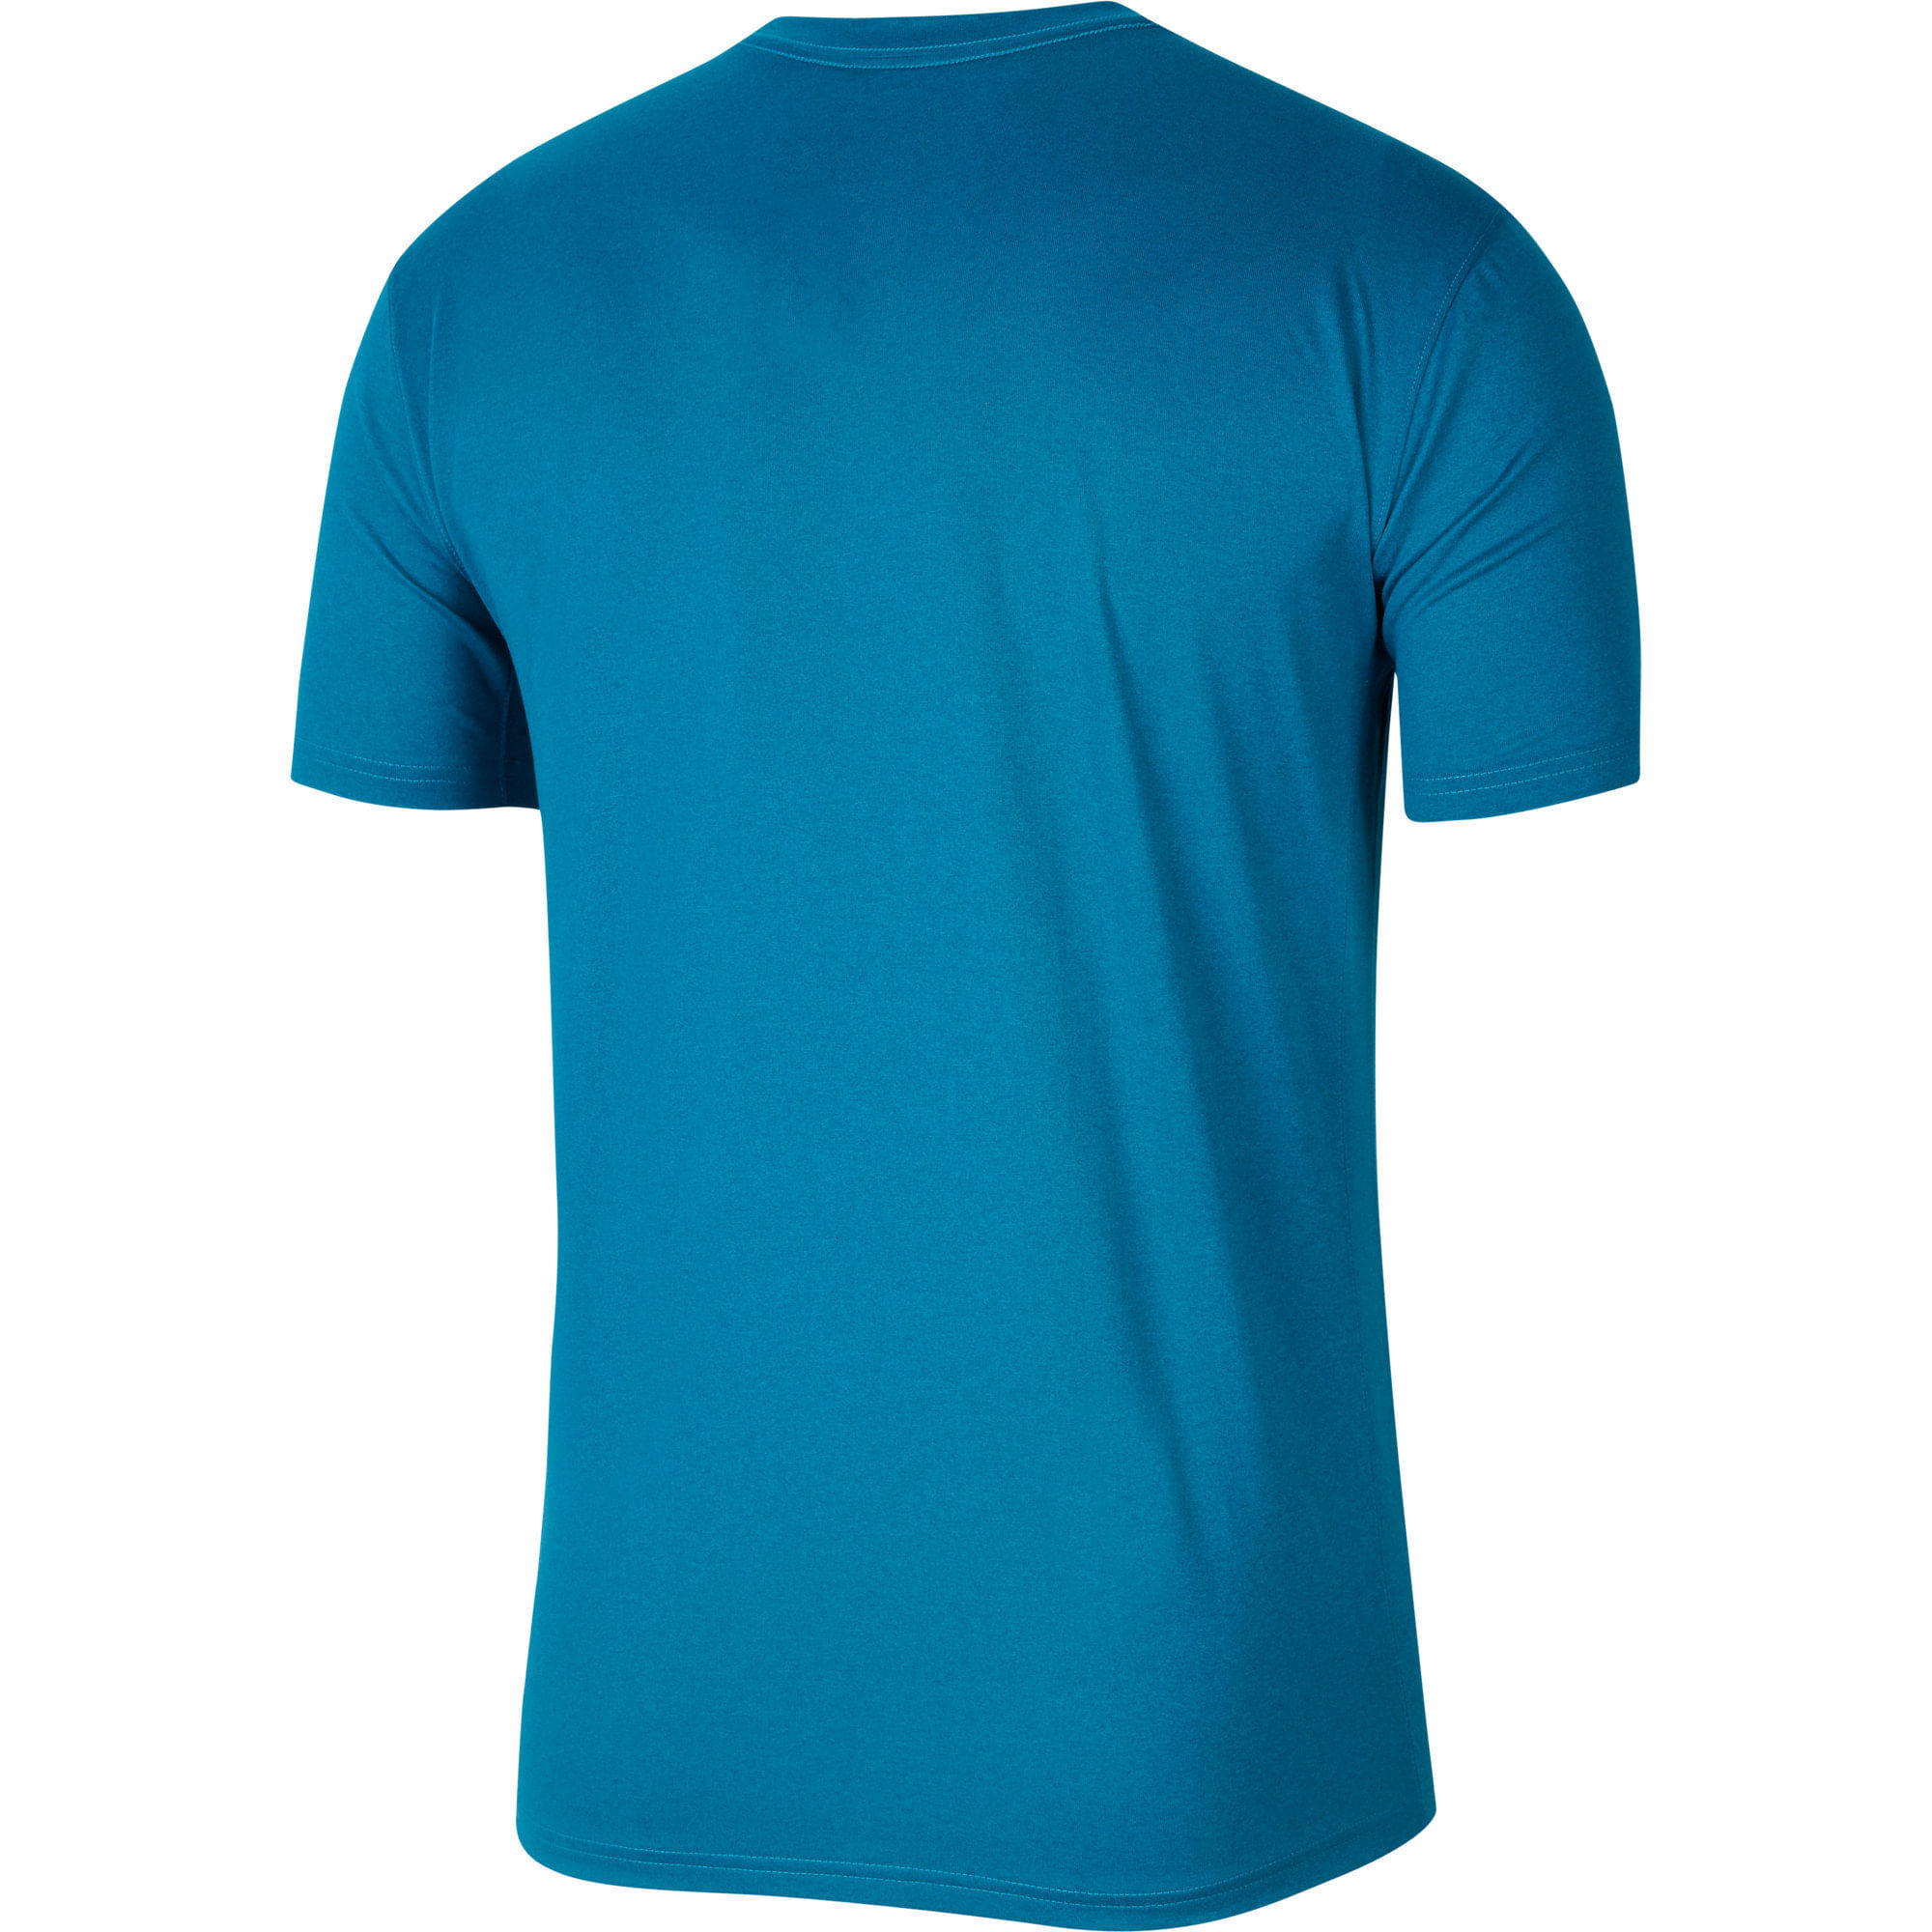 Camiseta Dry-fit – Código 6001 - Perel